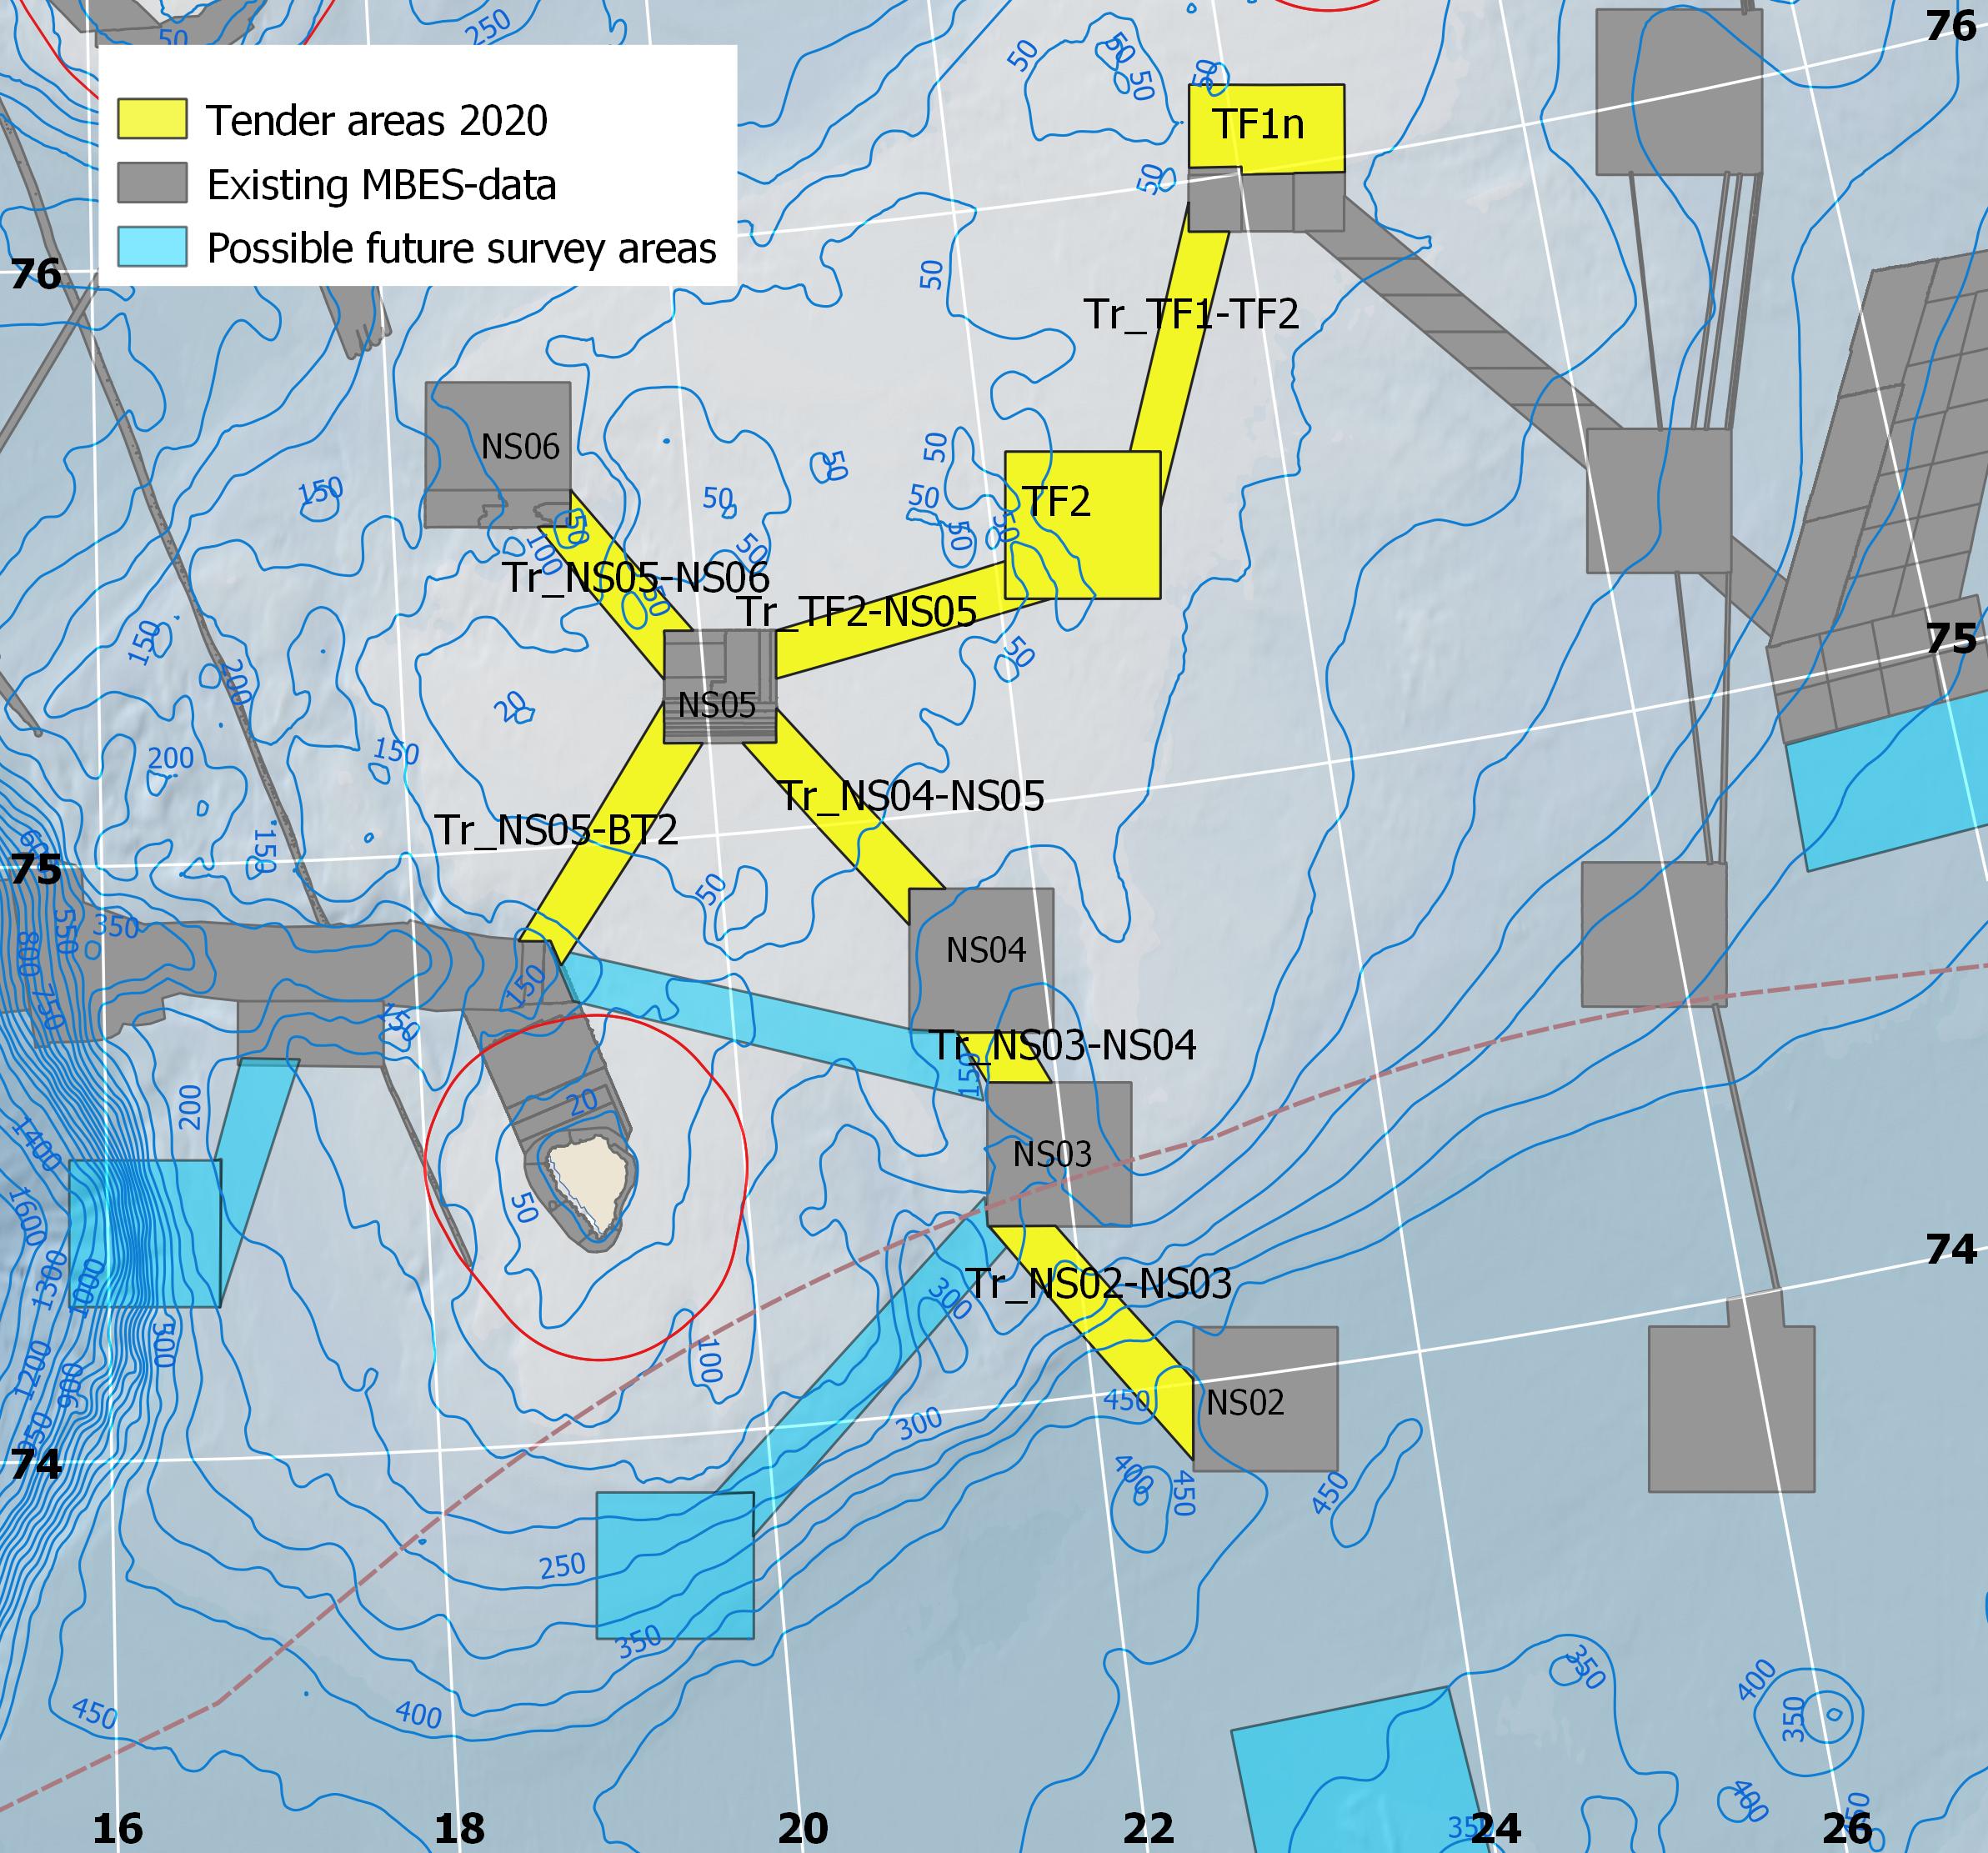 Kart med markeringer som viser hvilke områder på Spitsbergenbanken som skal dybdekartlegges i 2020.